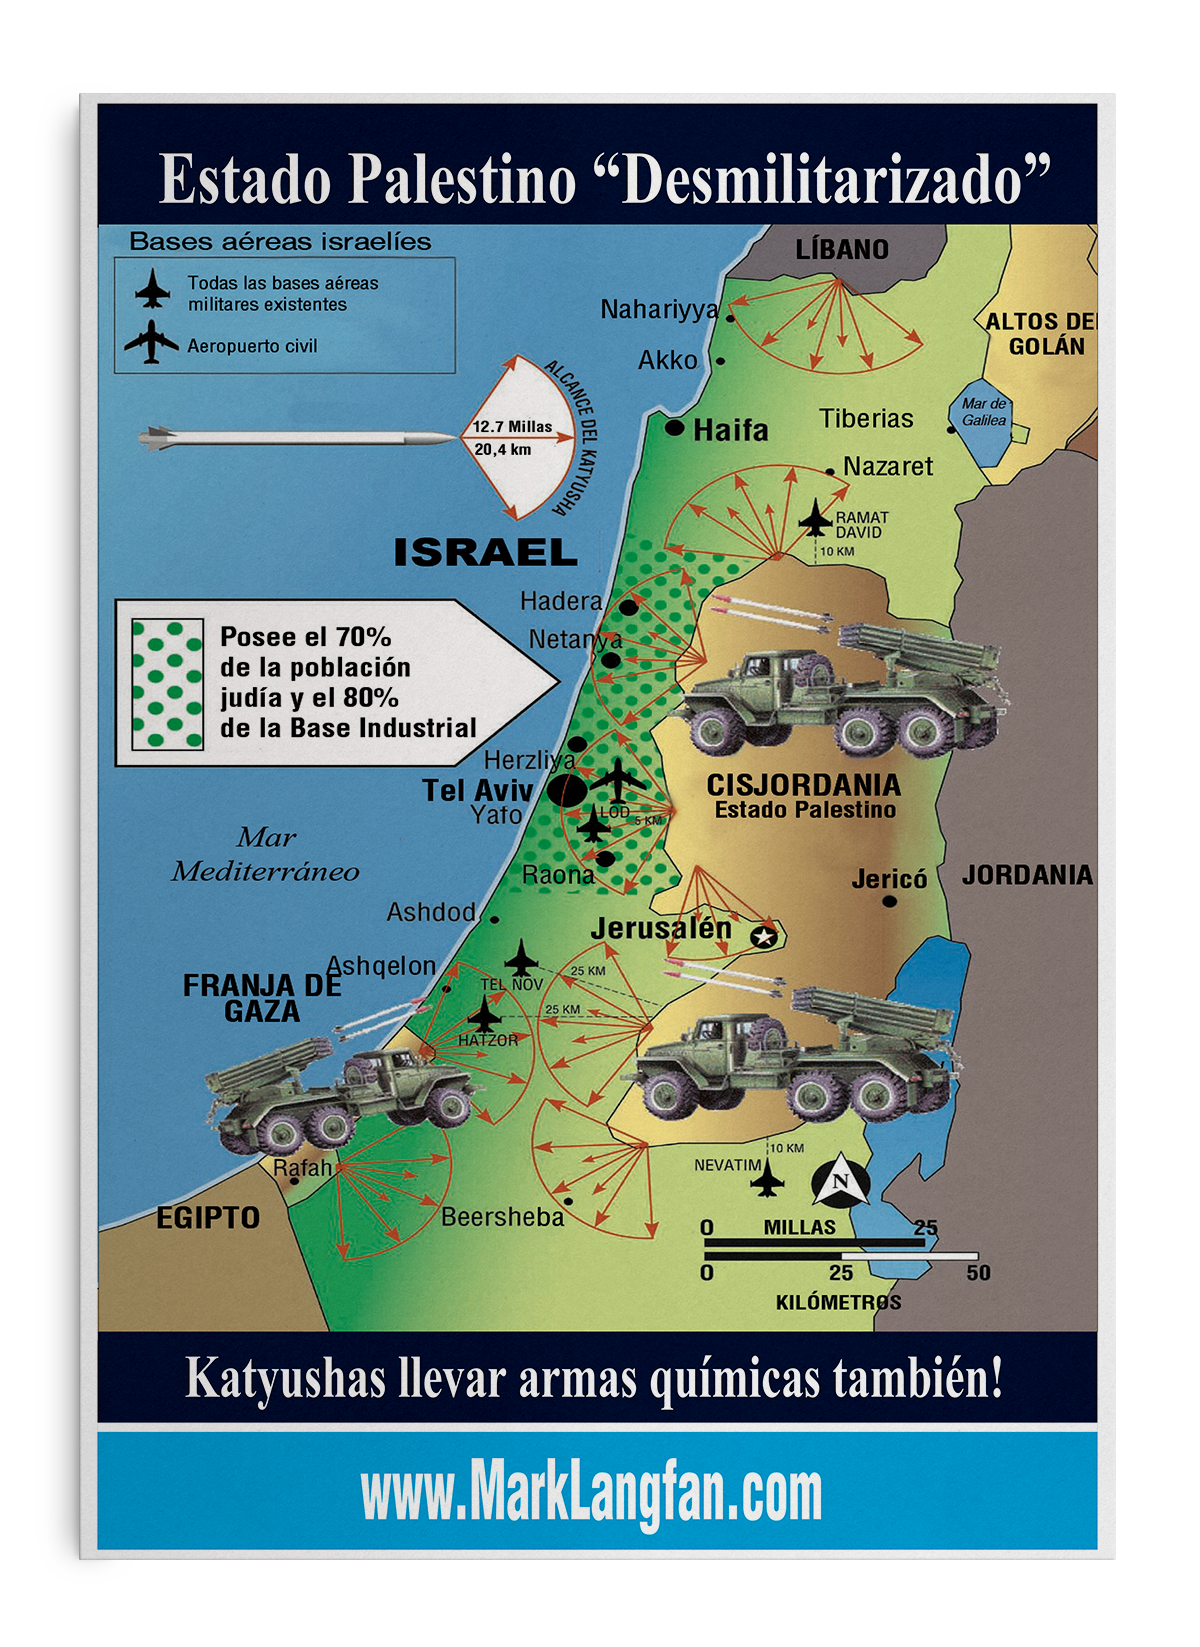 demilitarized palestinian state spanish